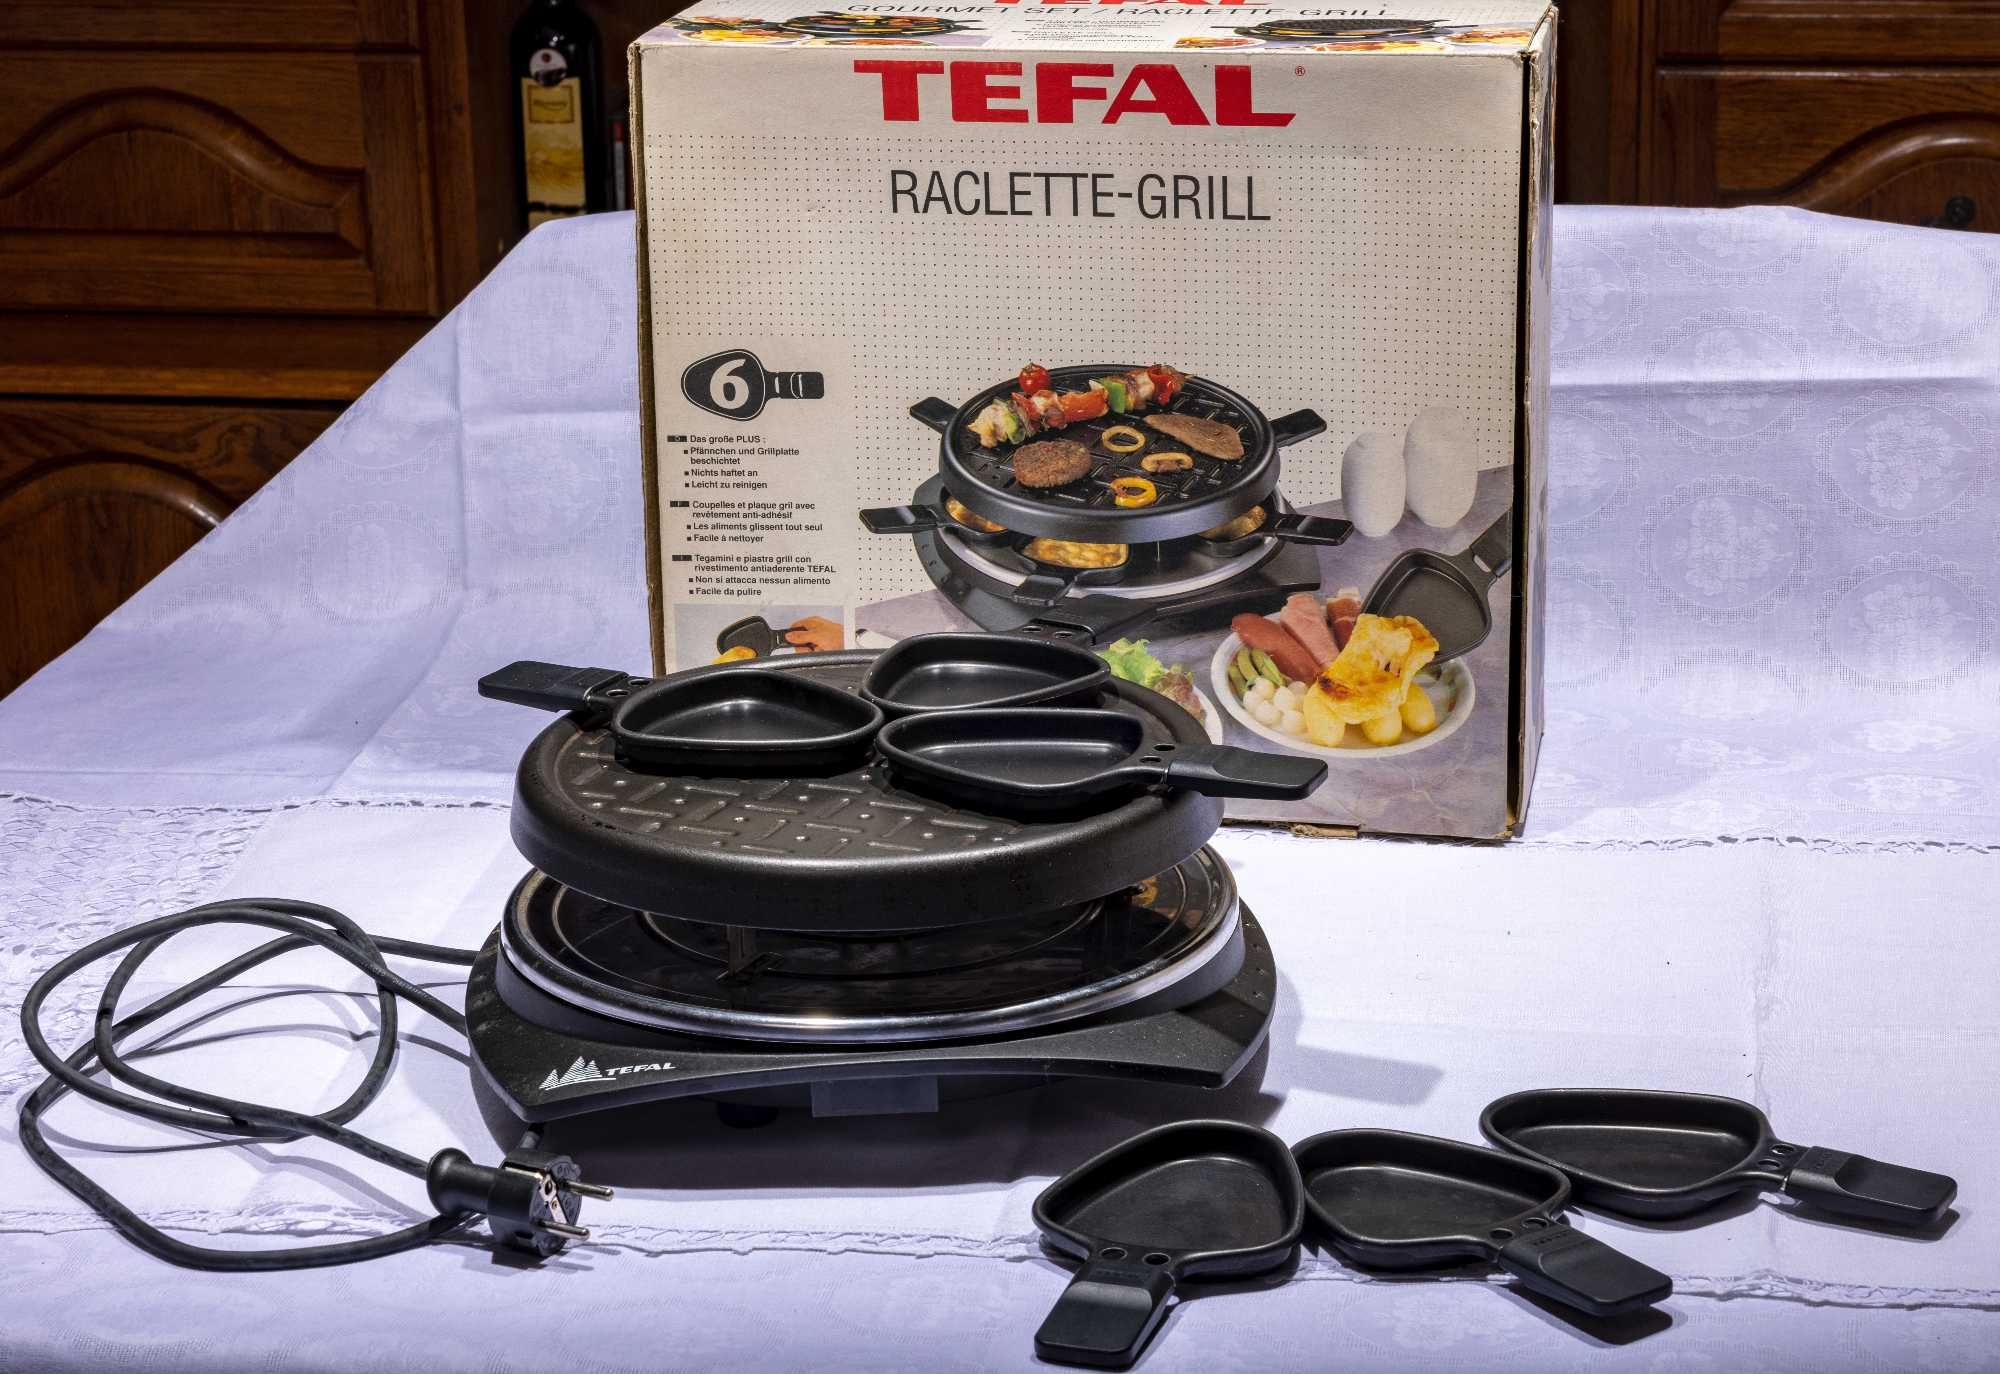 Grill raclette i fondue - Tefal